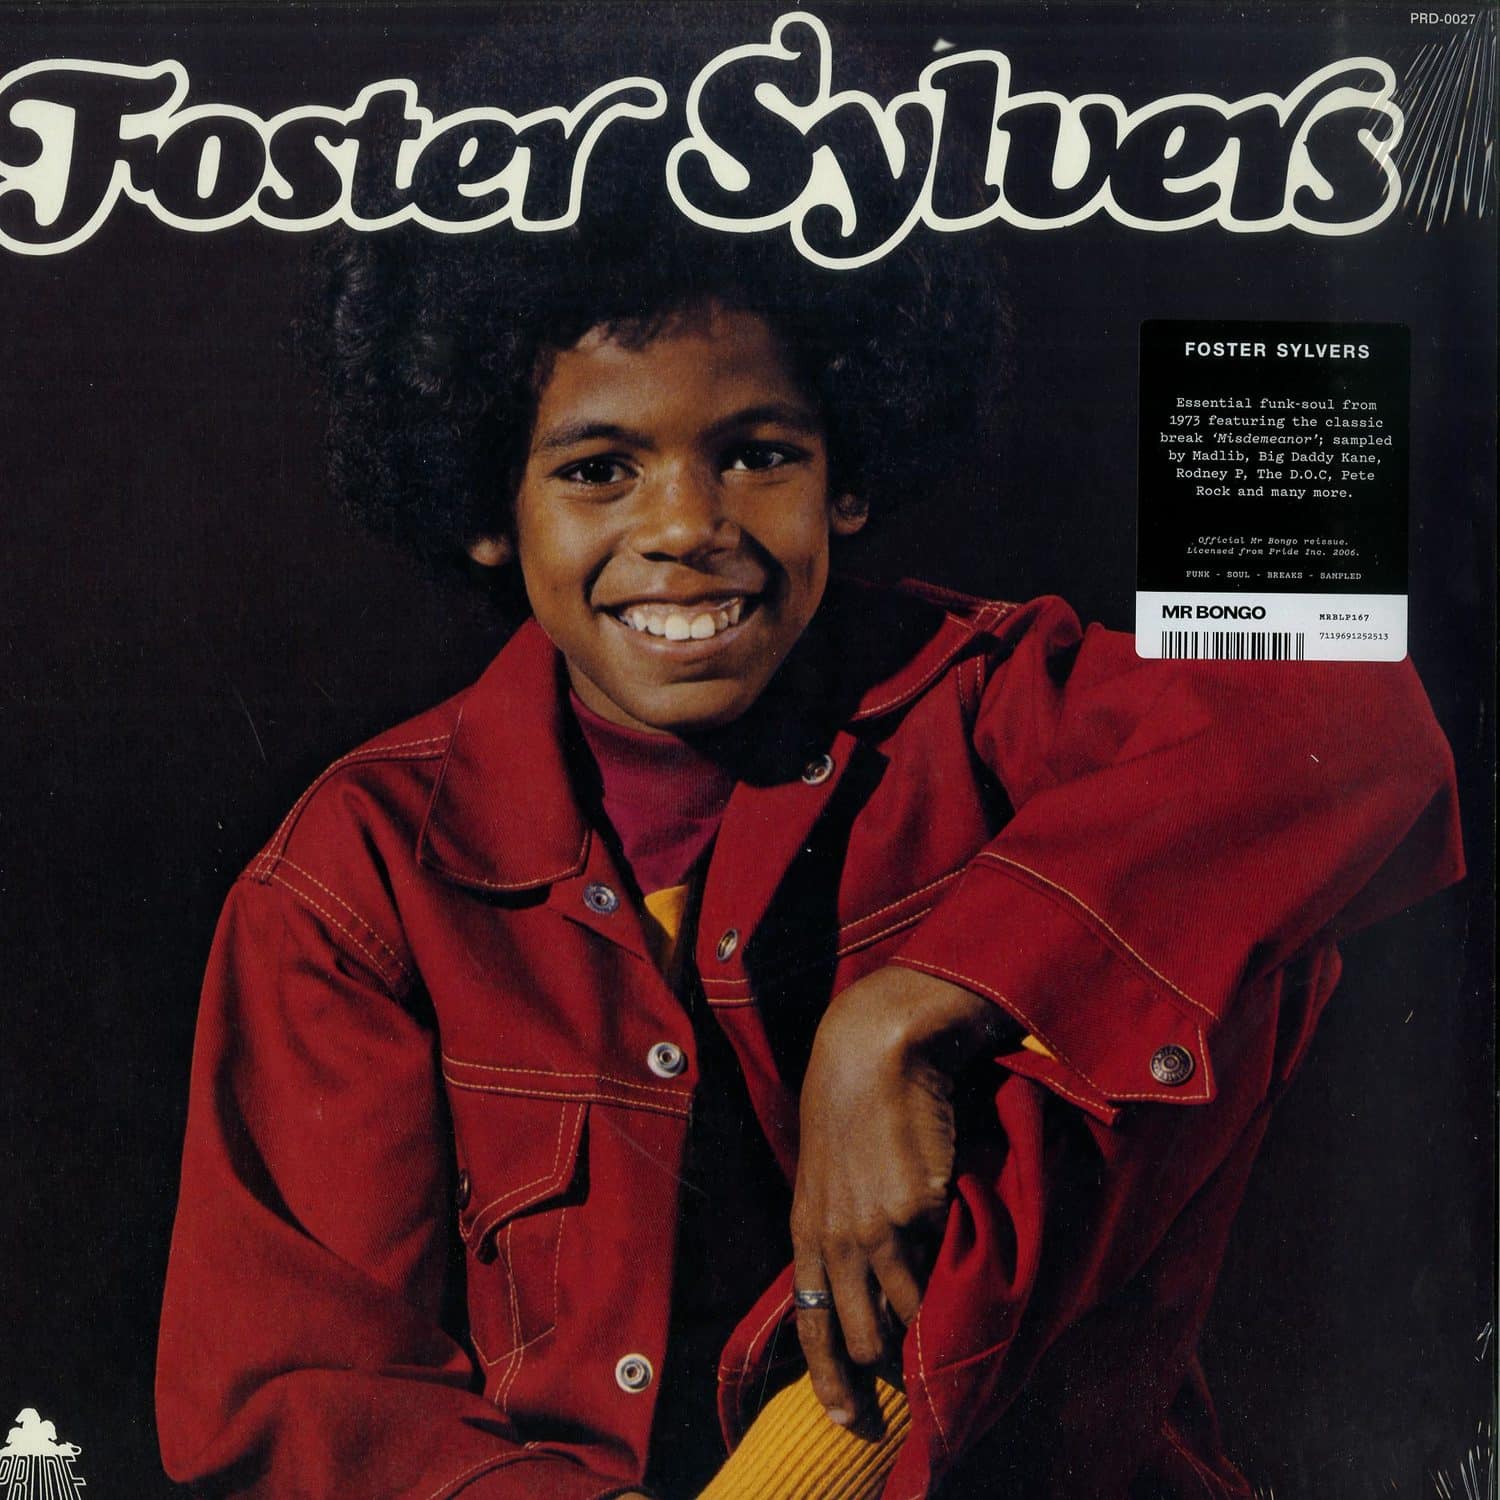 Foster Sylvers - FOSTER SYLVERS 